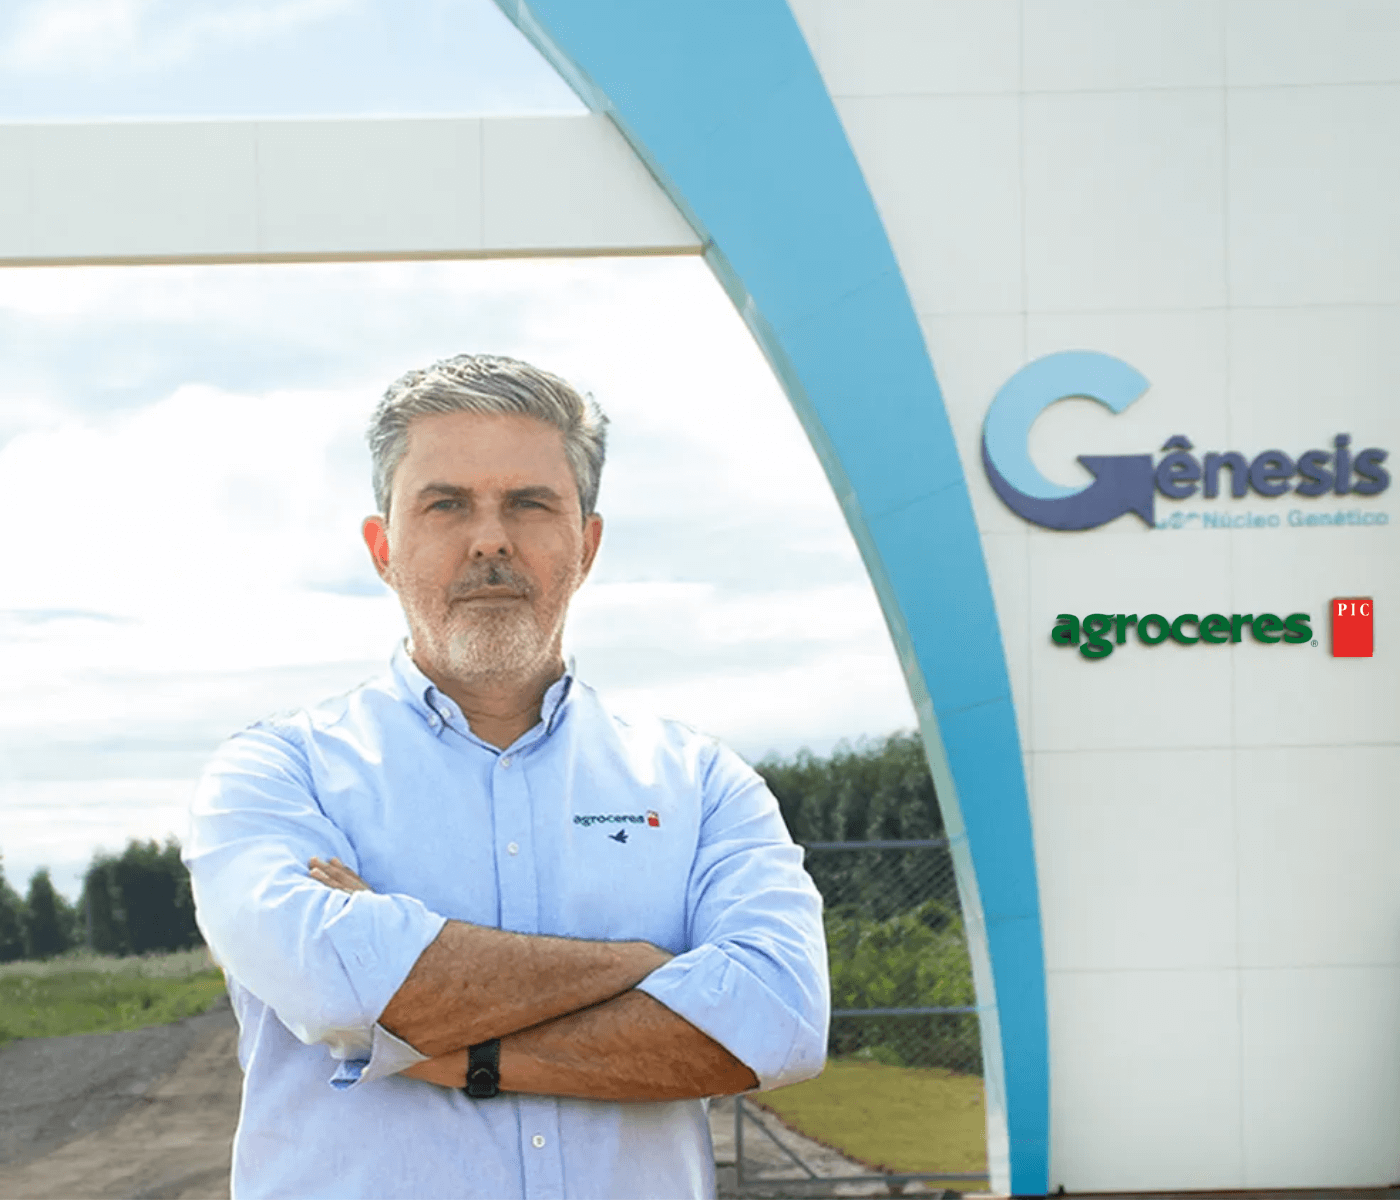 Agroceres PIC inaugura novo Núcleo Genético no Paraná